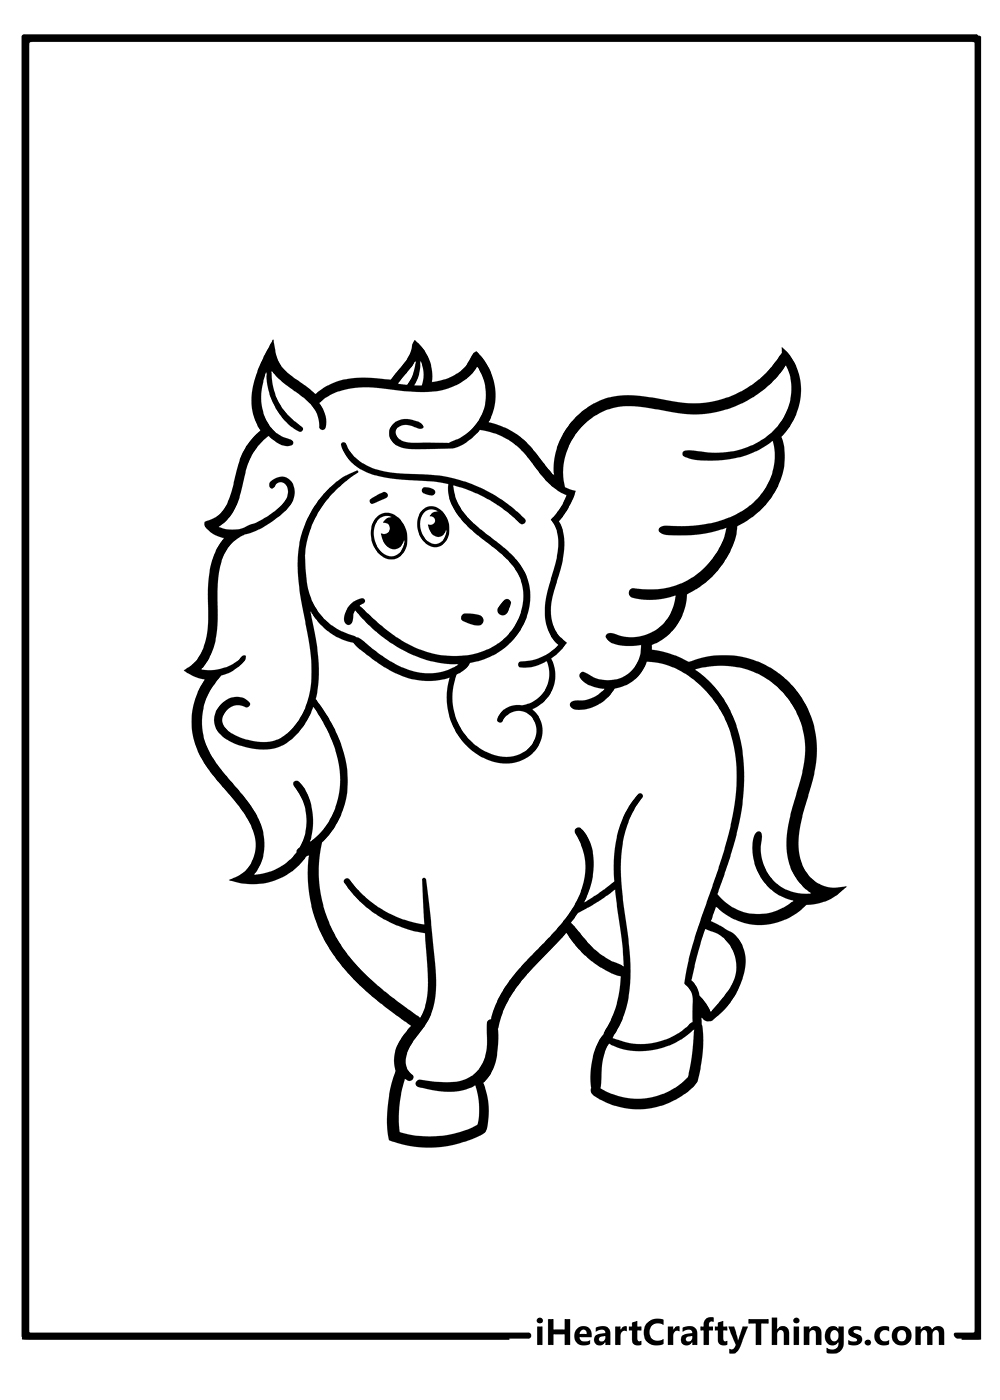 Pegasus Coloring Original Sheet for children free download